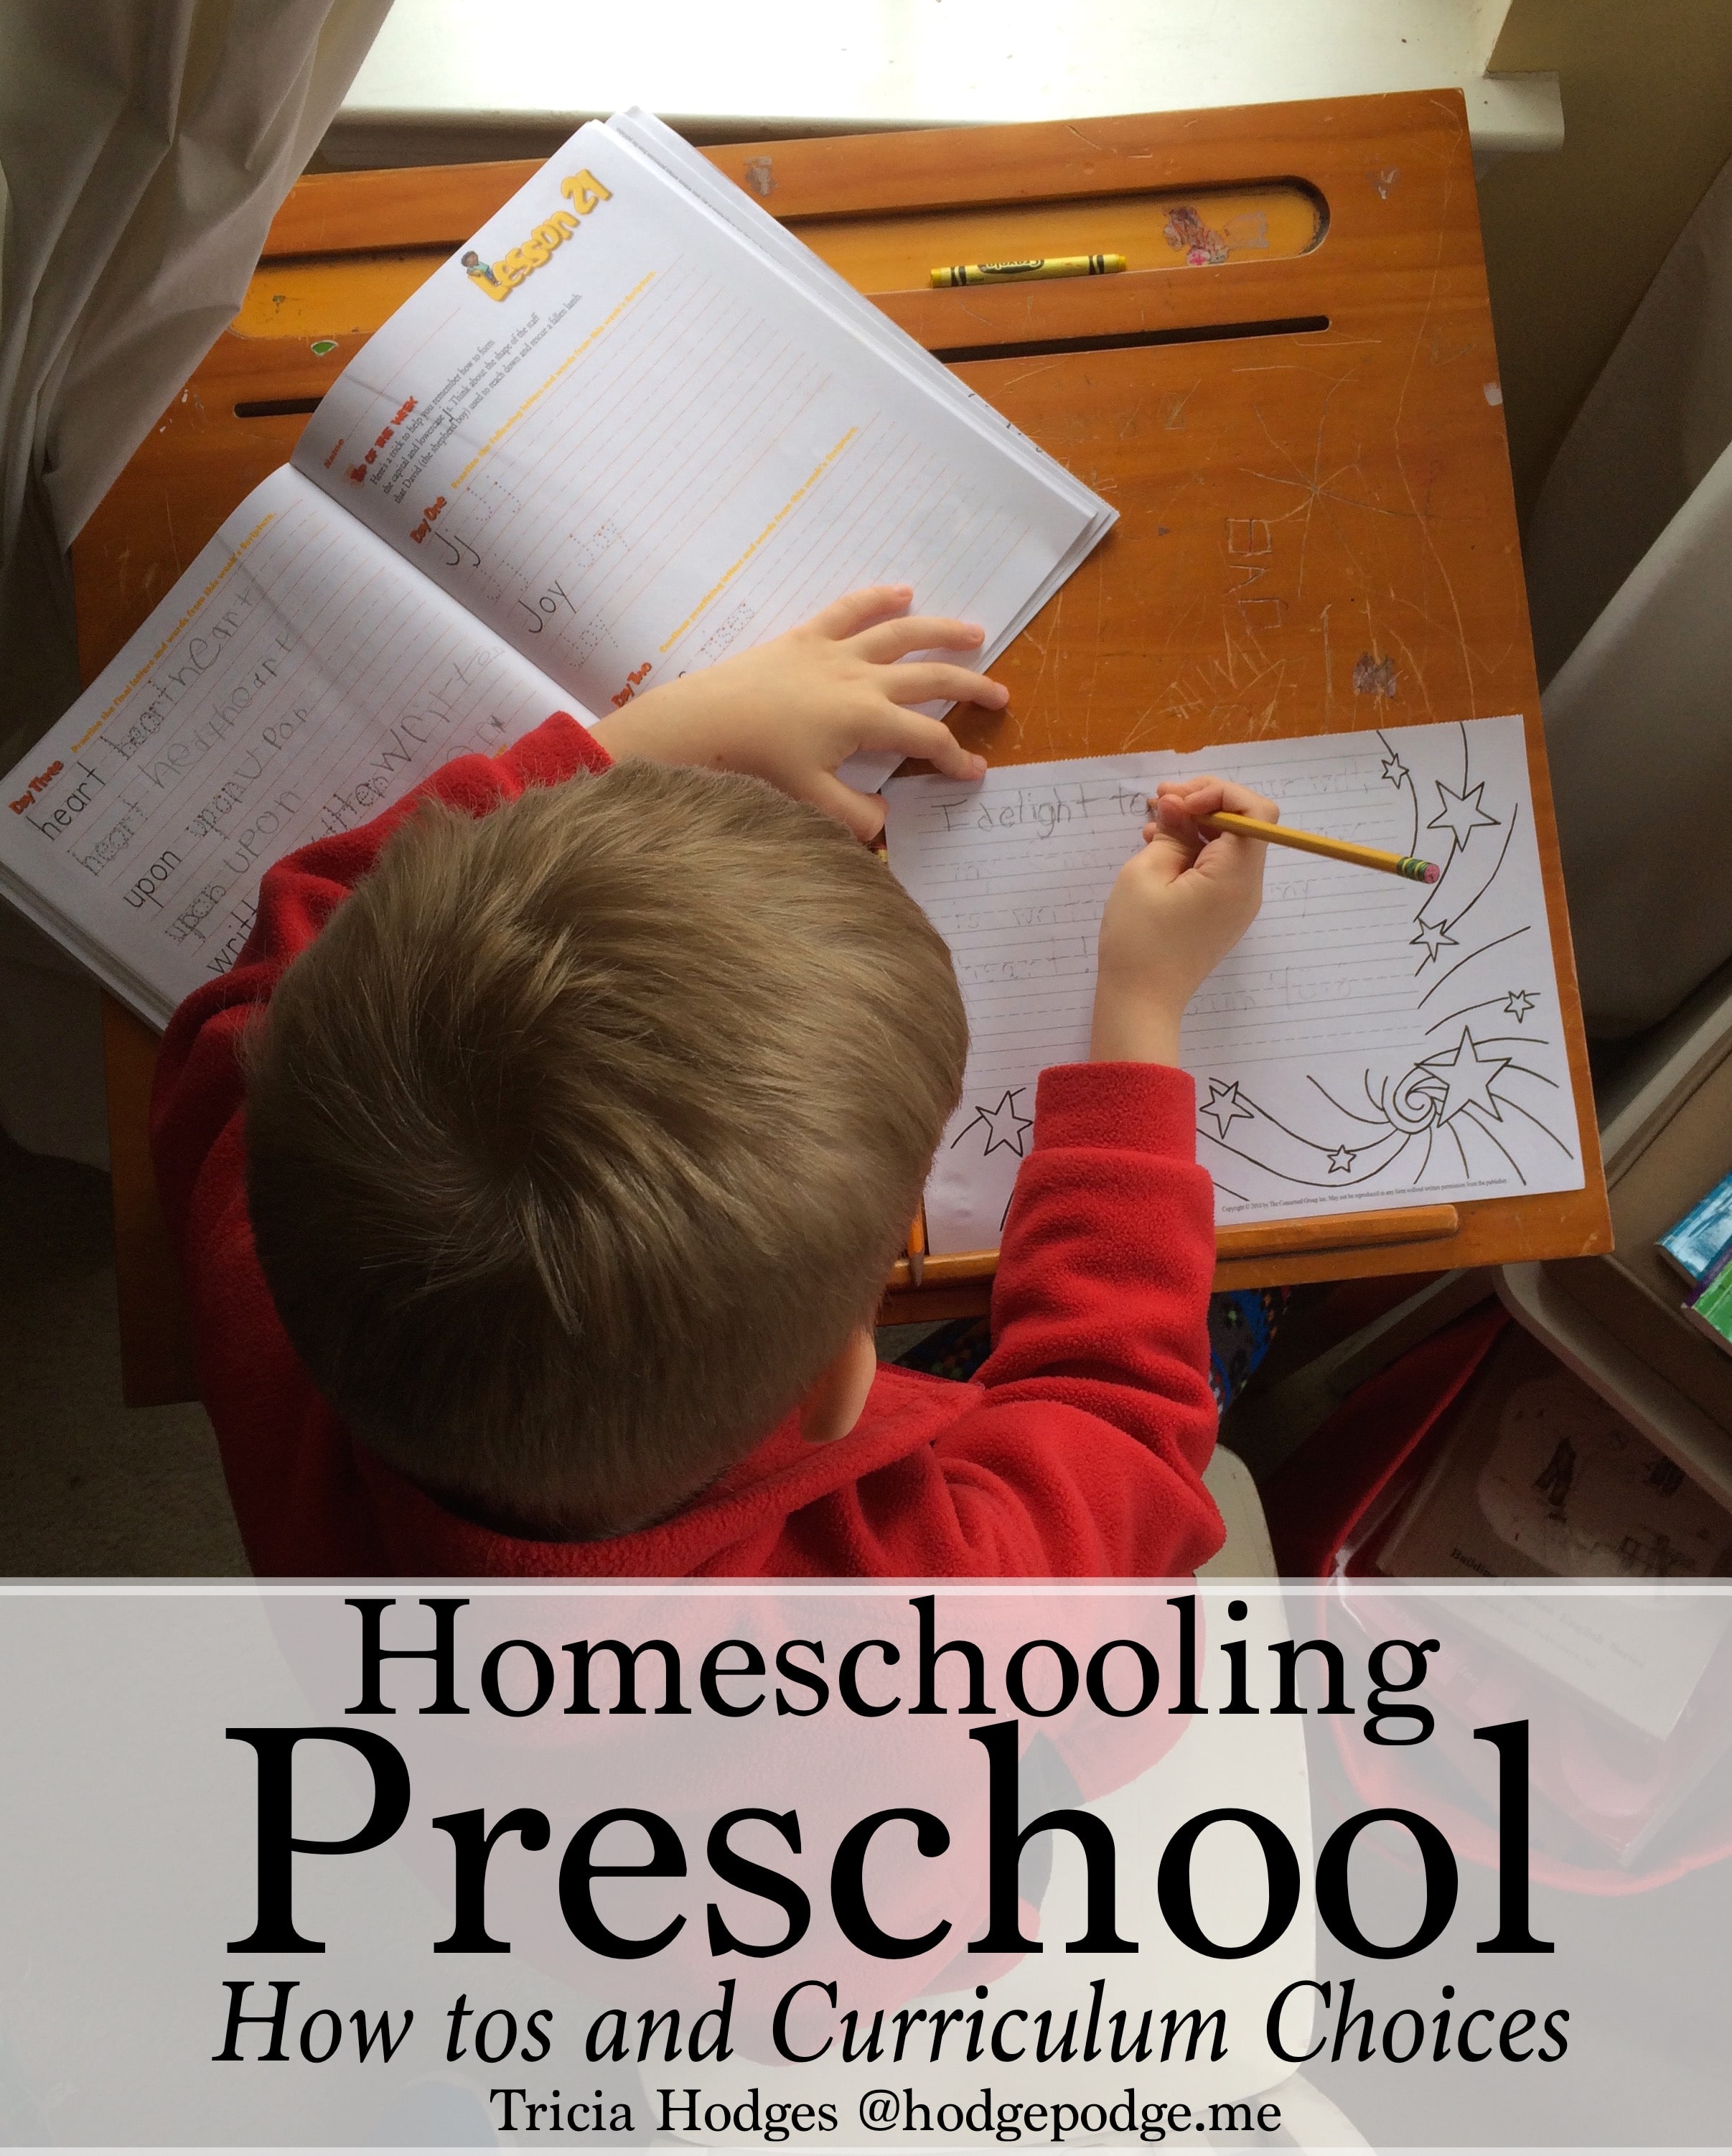 Curriculum Choices for Homeschooling Preschool